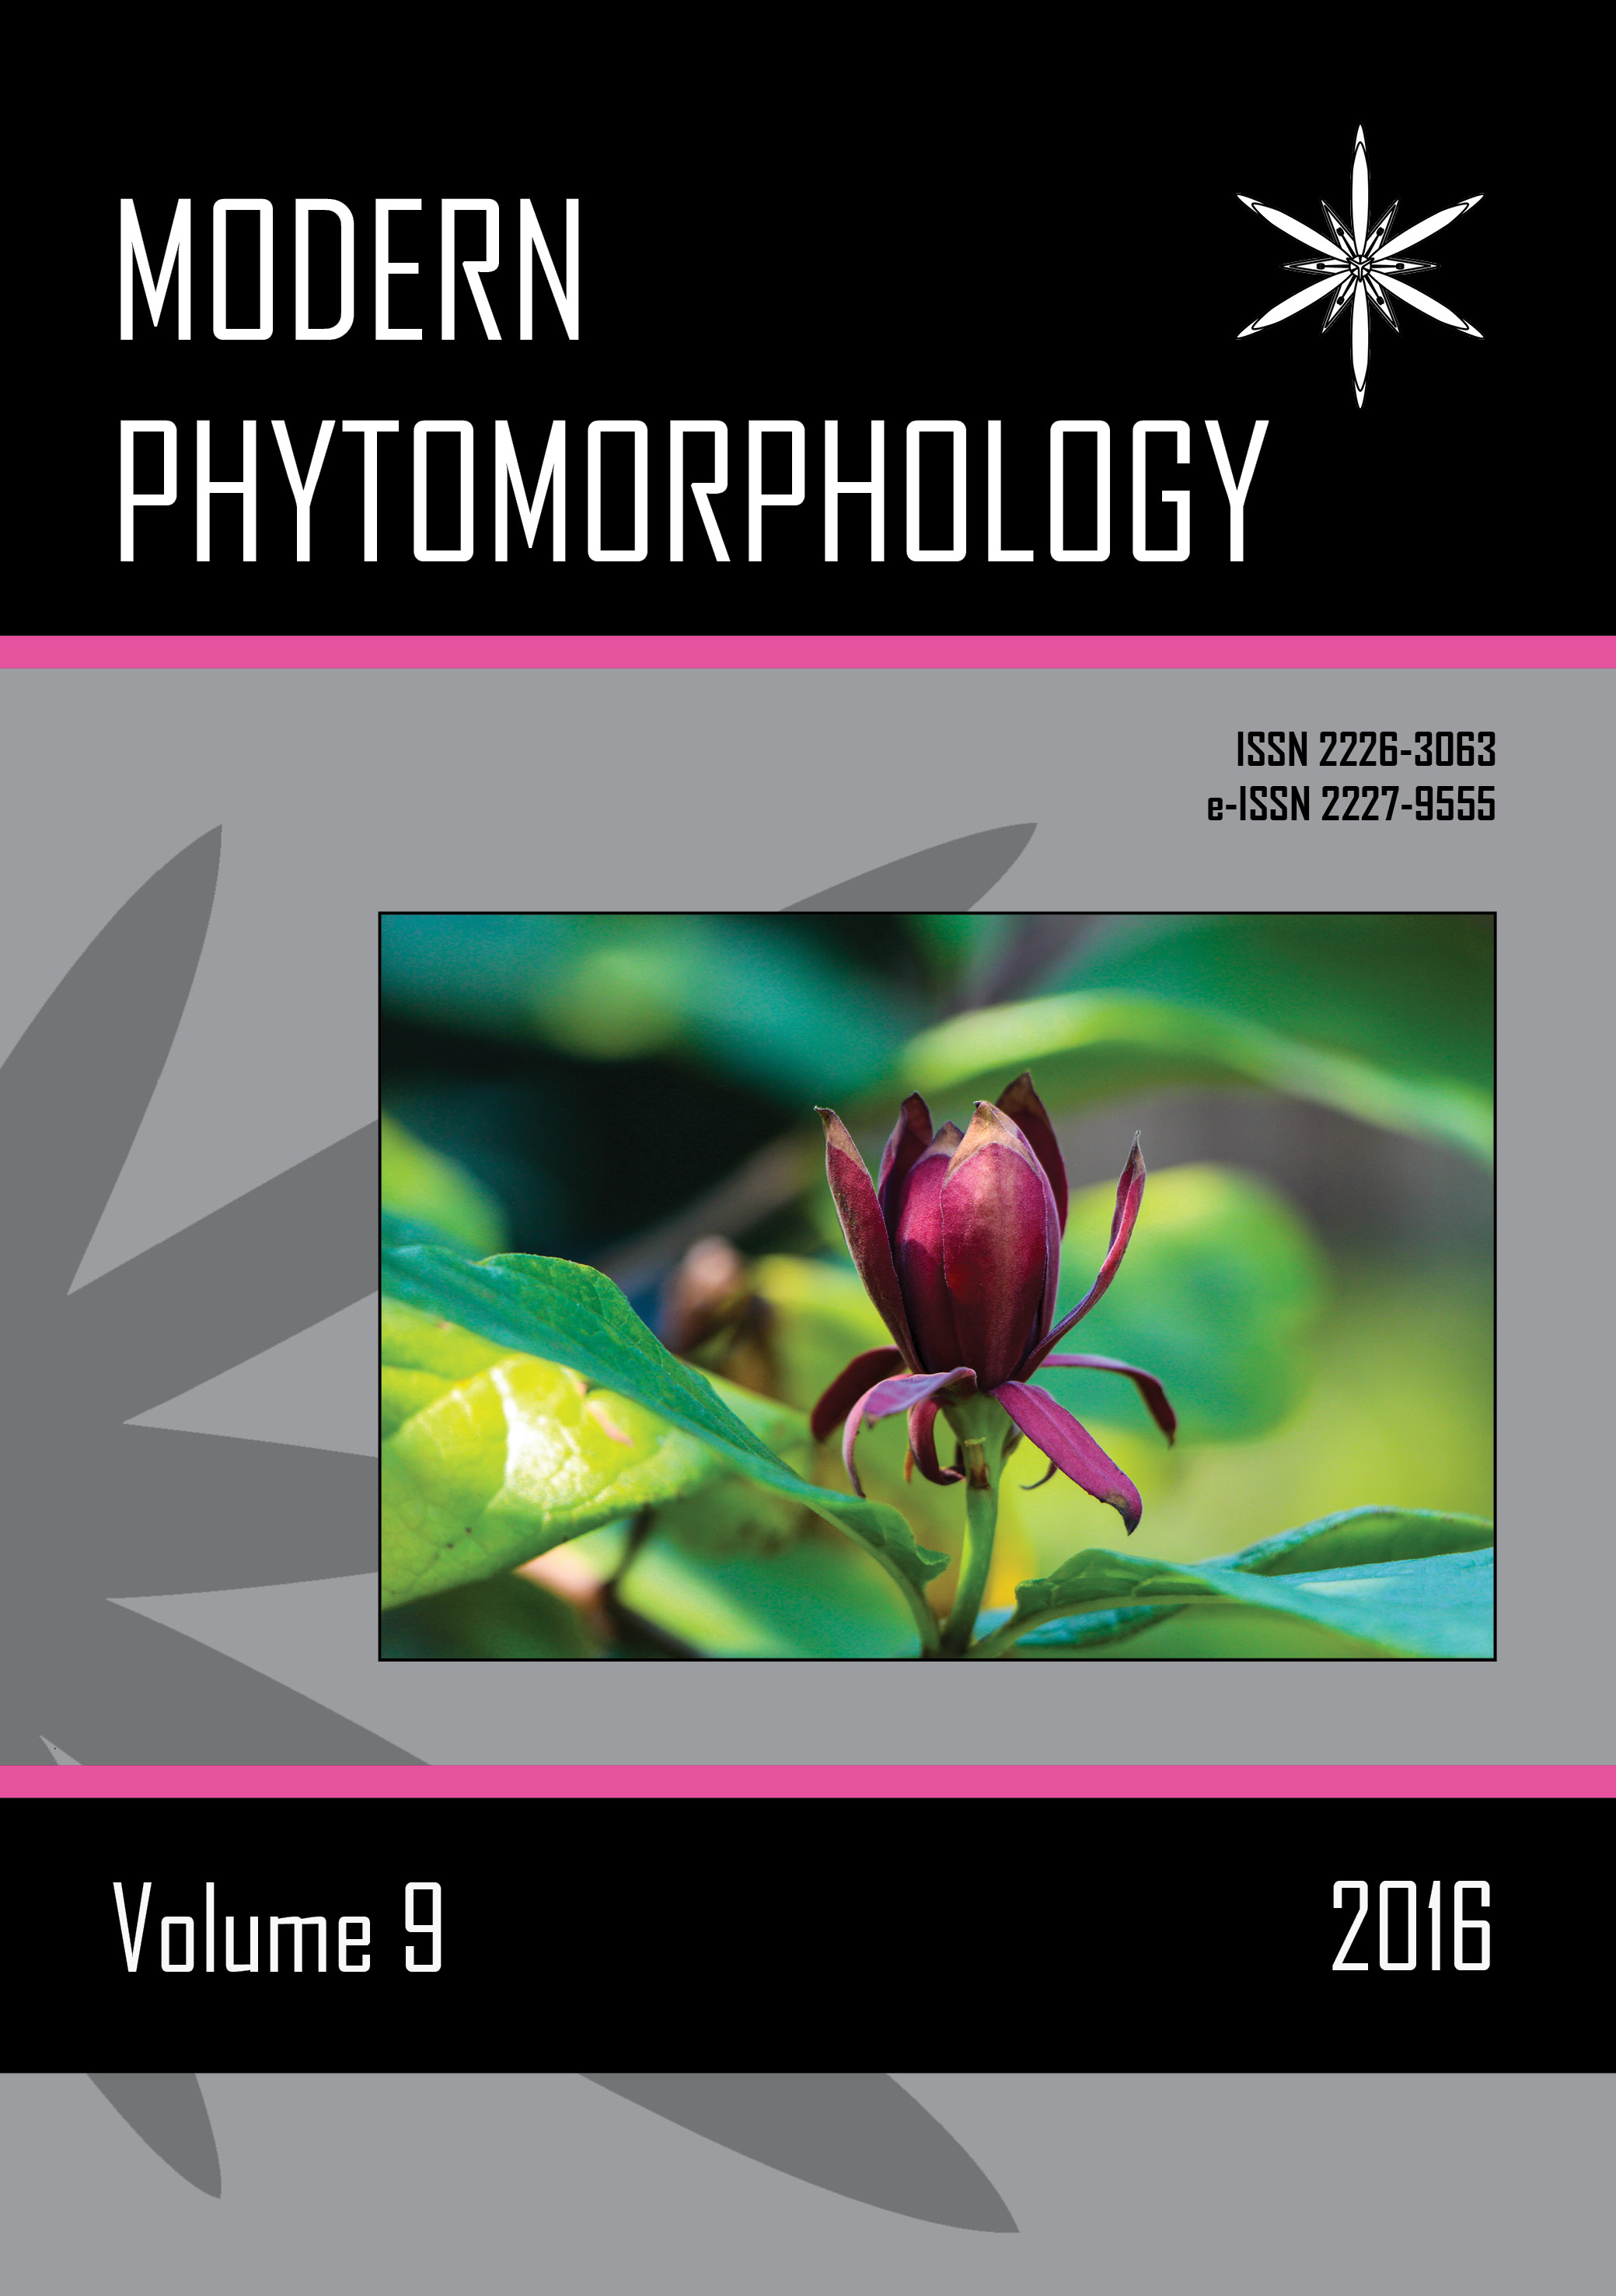 Modern Phytomorphology cover, Vol. 9